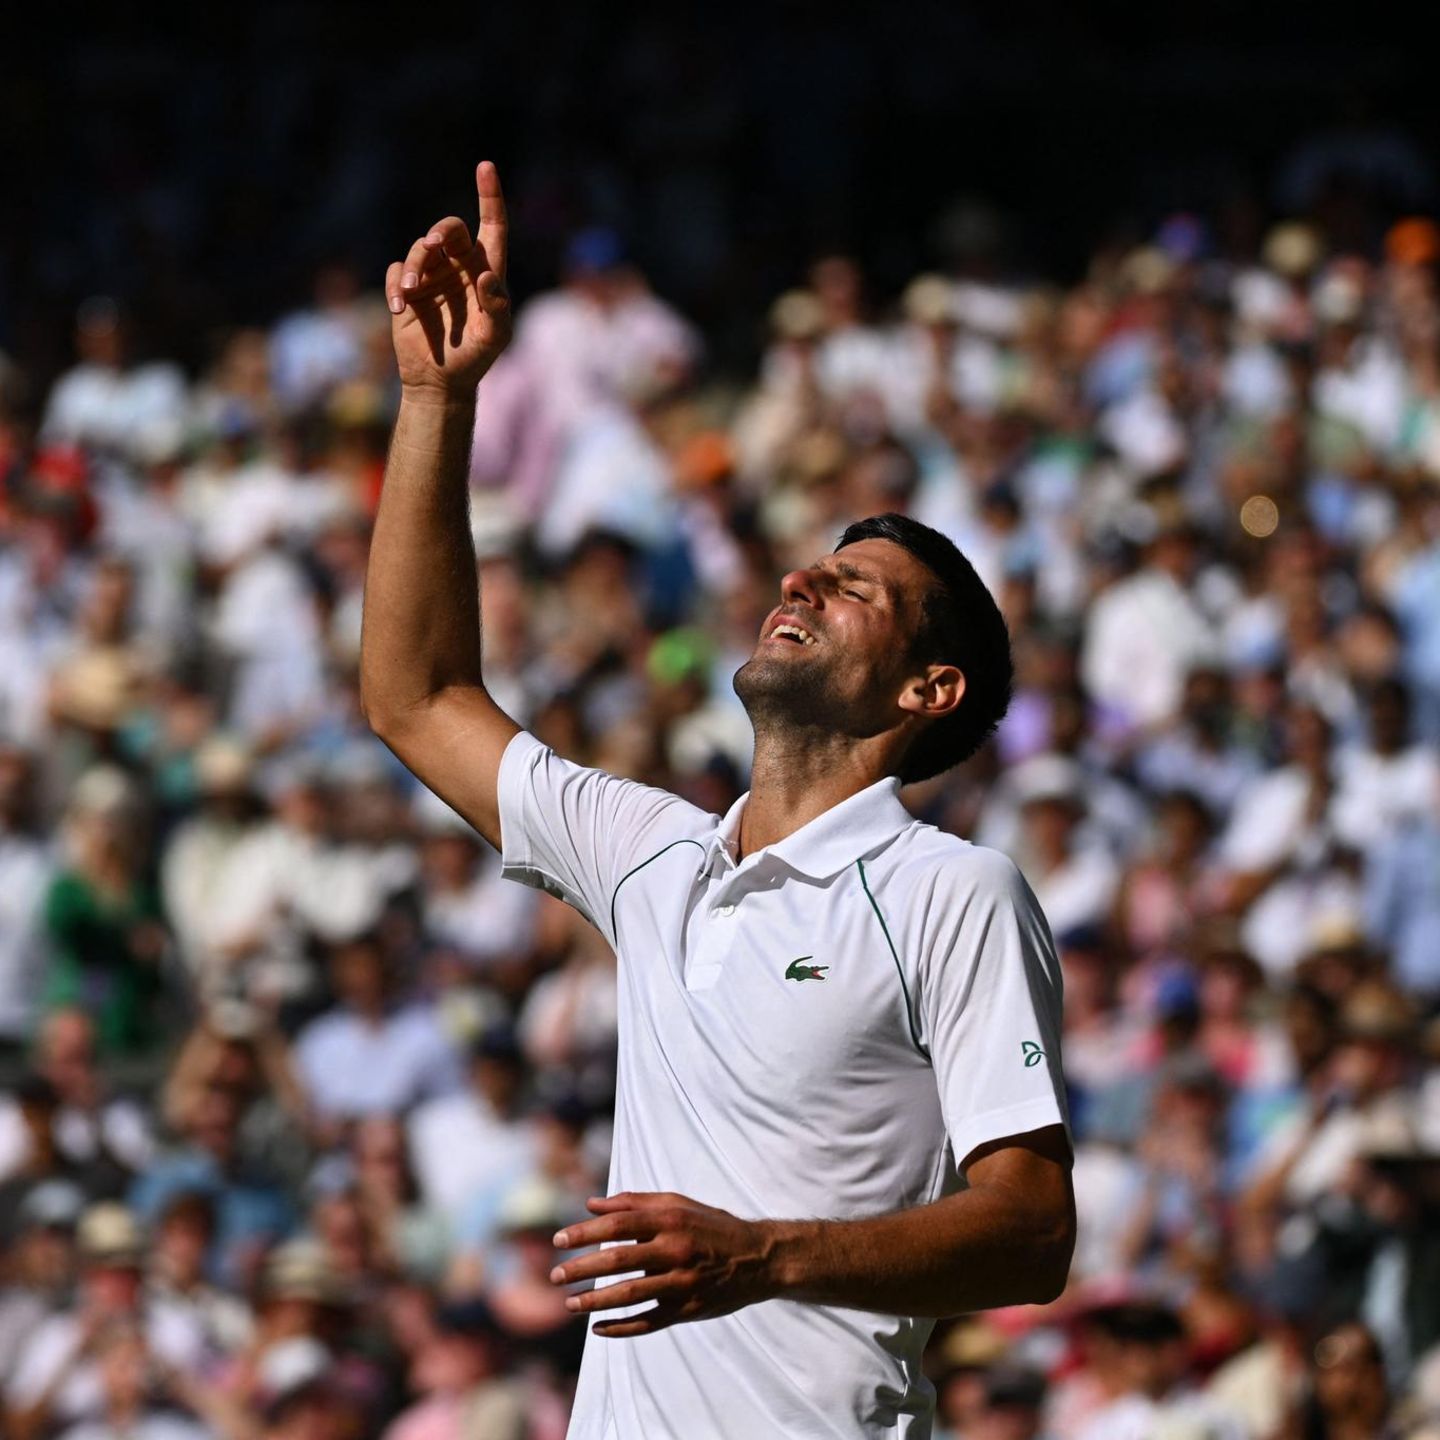 Sieg im Finale Novak Djokovic zum siebten Mal Wimbledon-König STERN.de